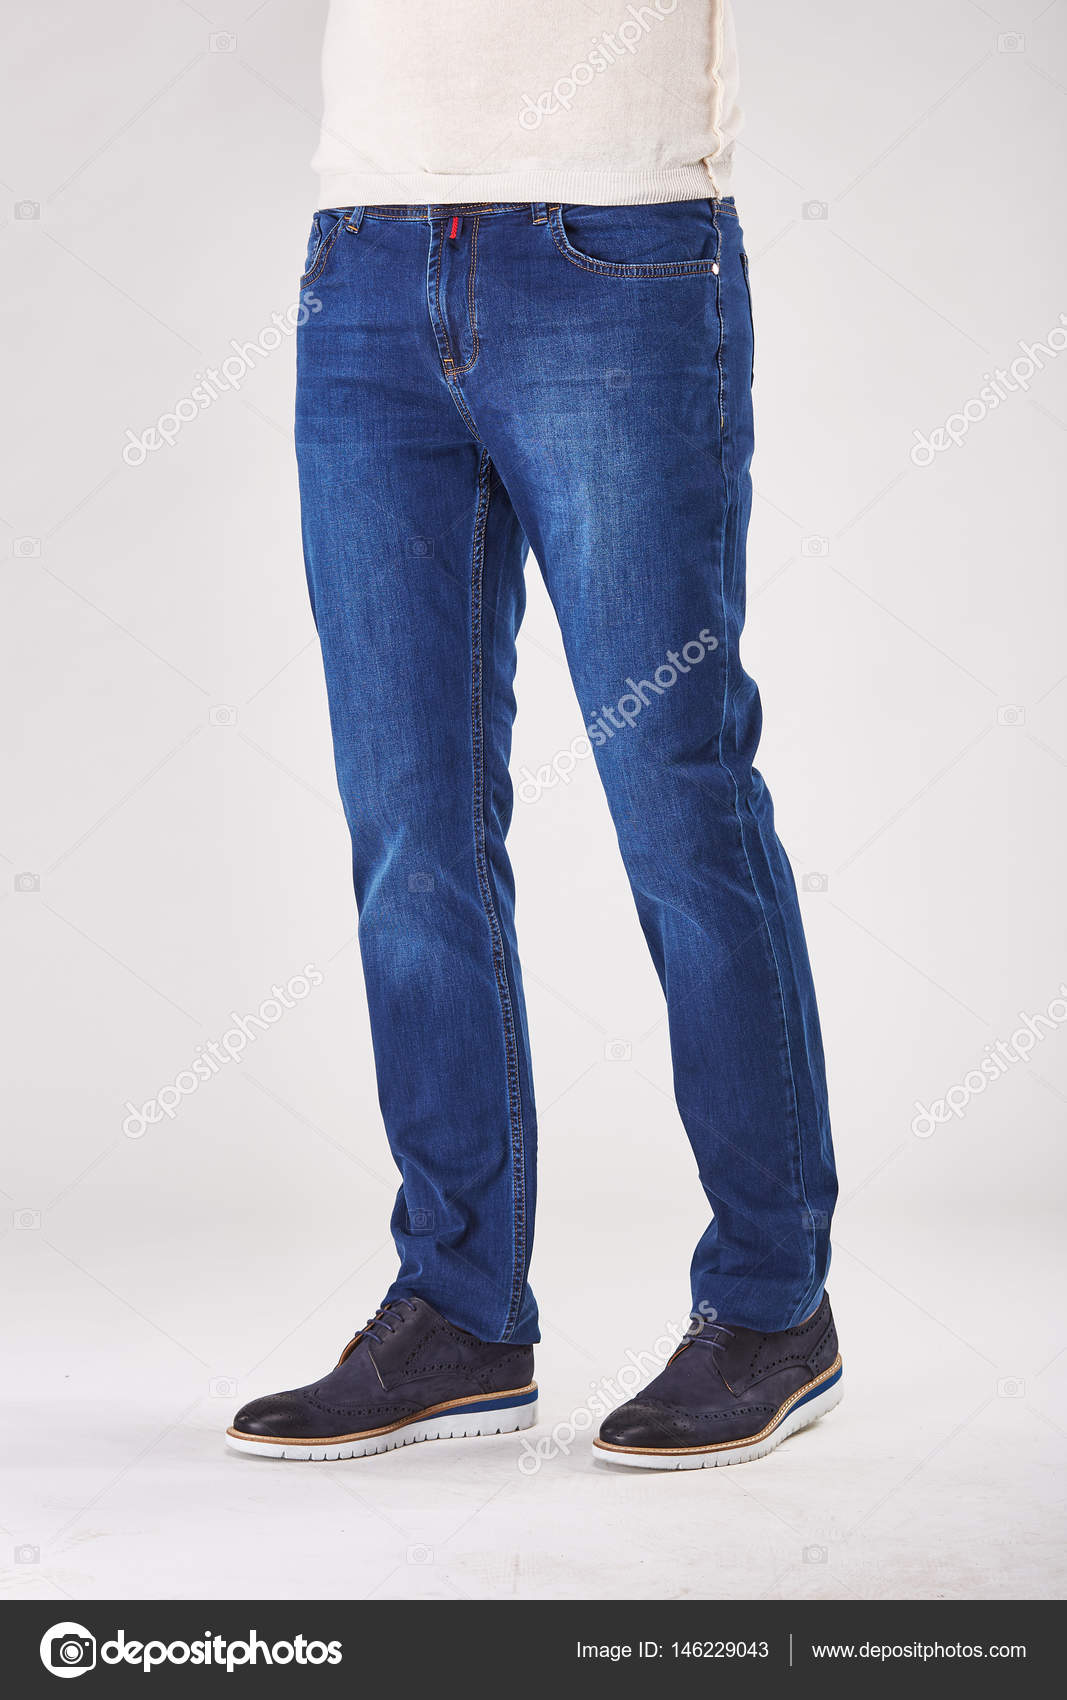 black shoes on blue jeans